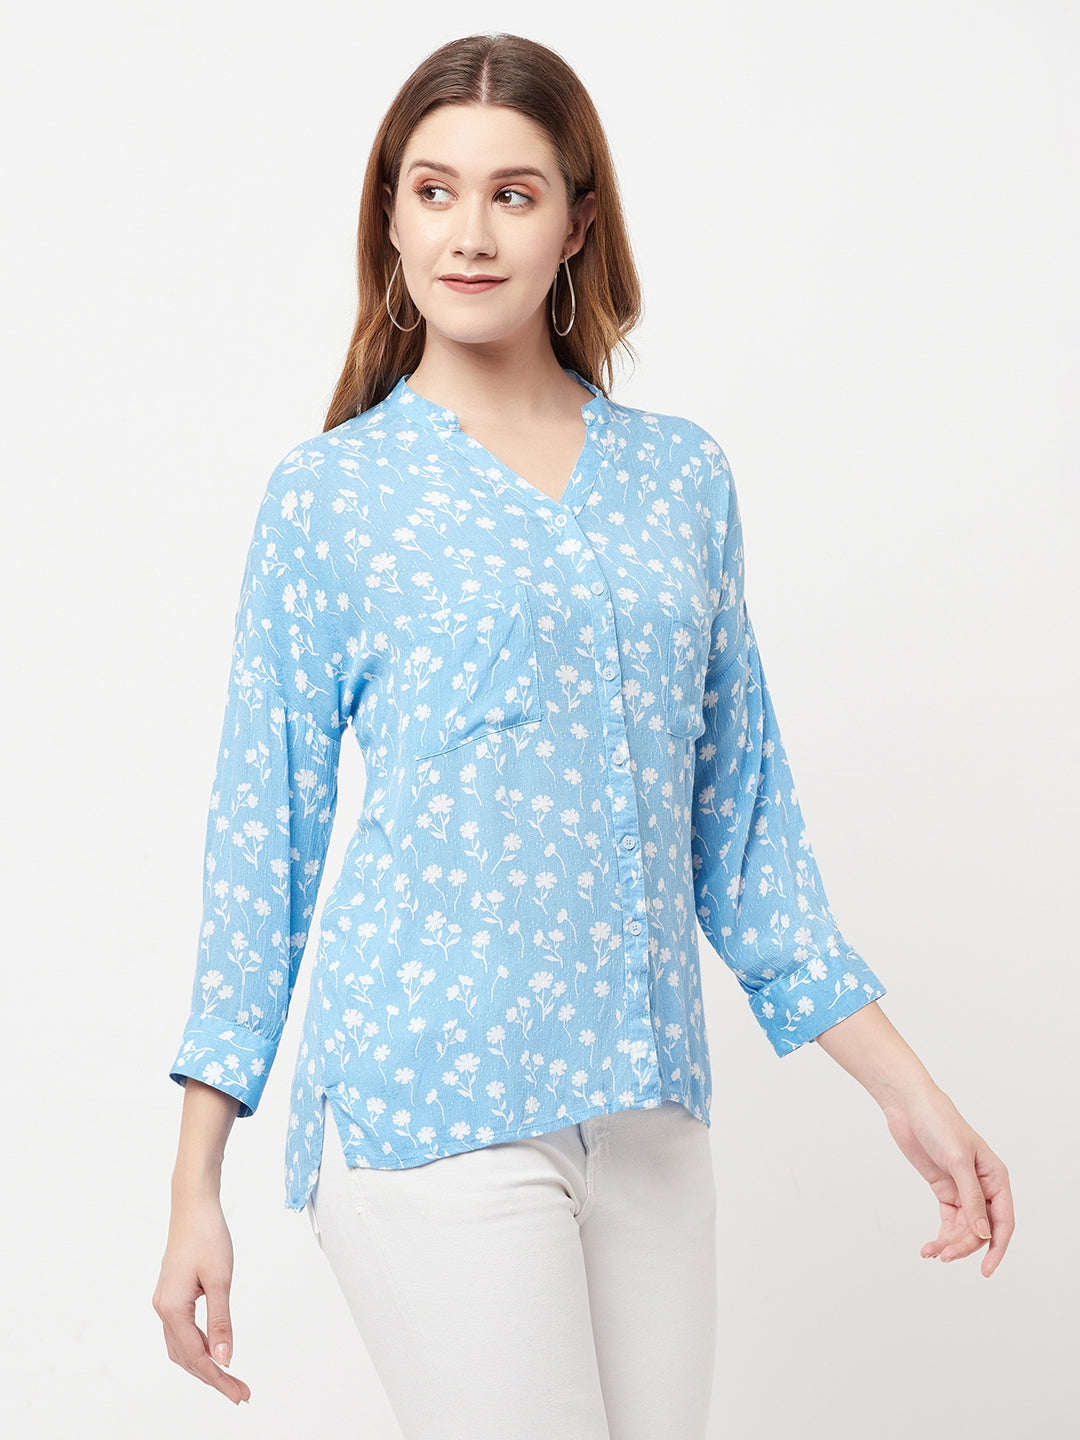 Blue Floral Printed V-Neck Shirt - Women Shirts